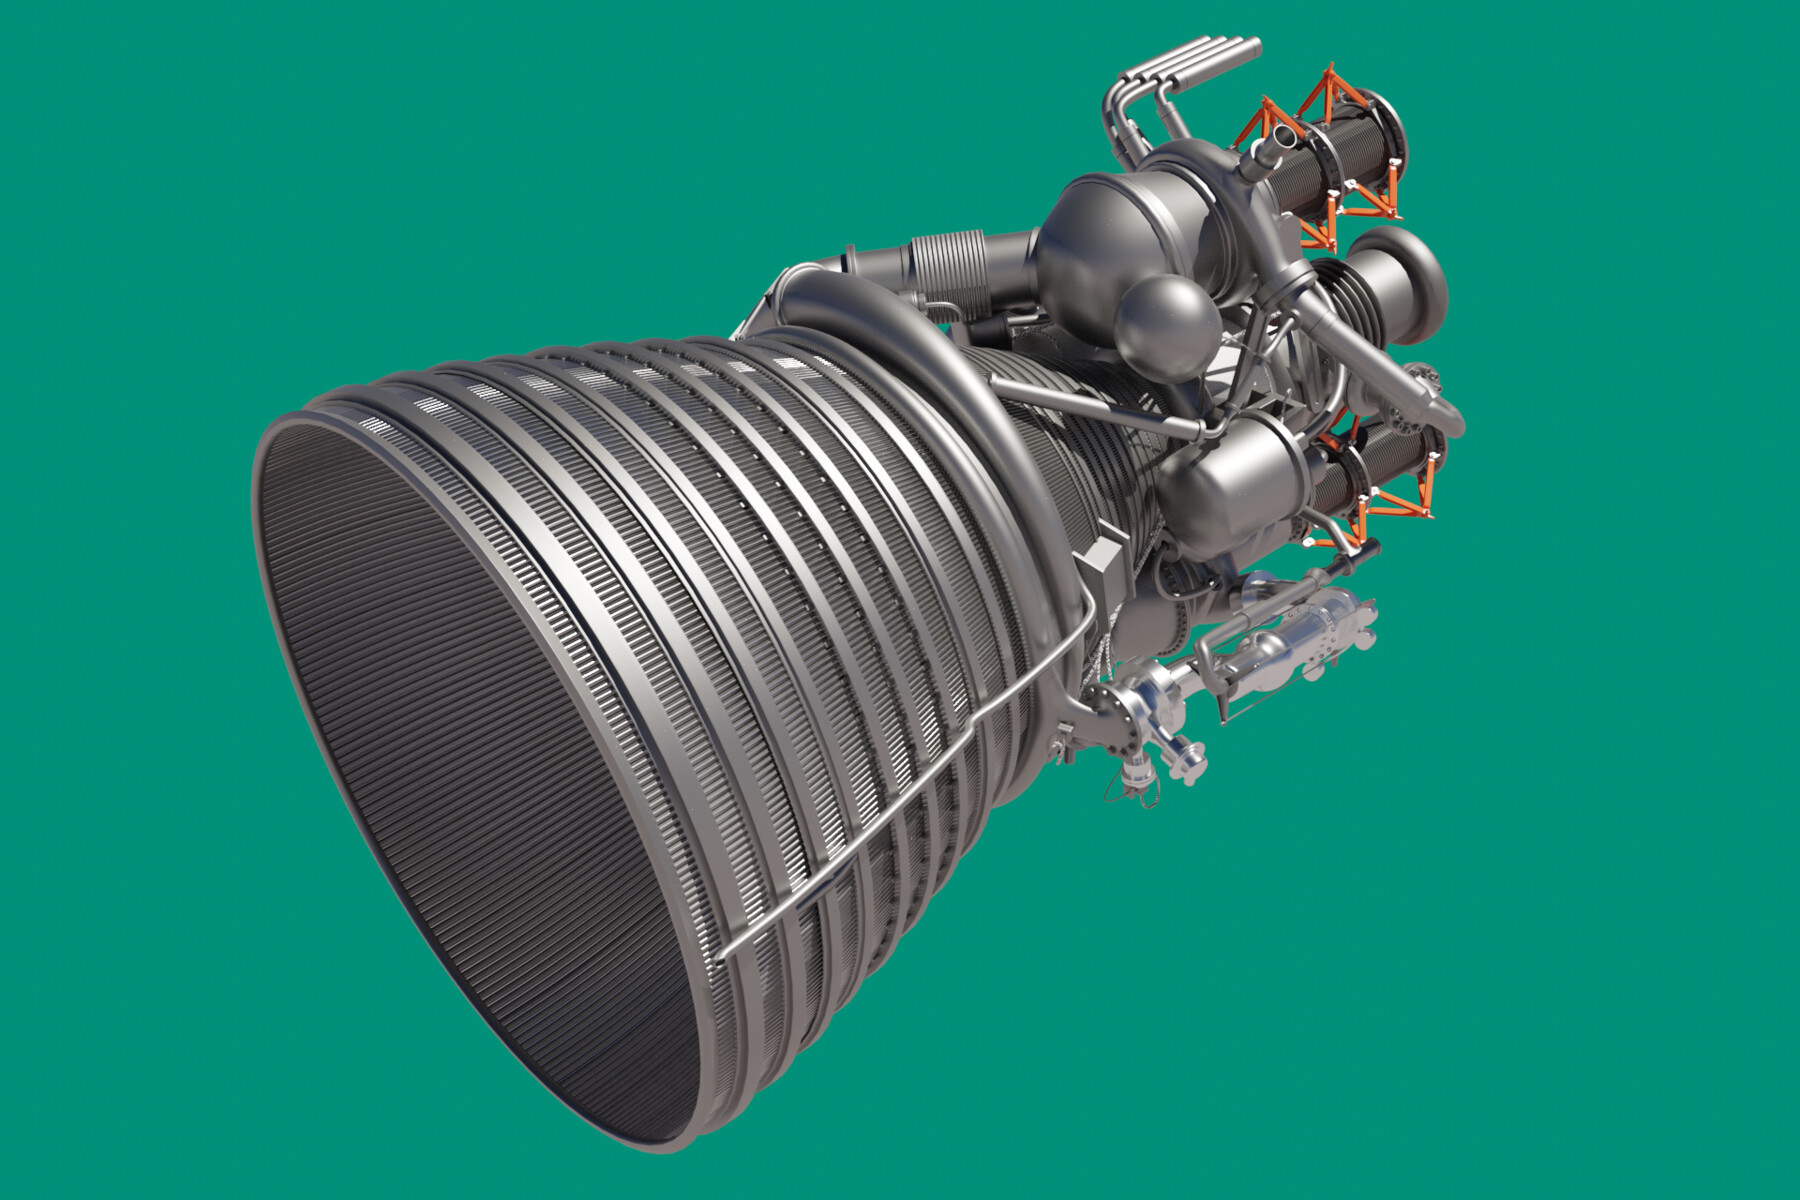 S-3D Rocket Engine Overview